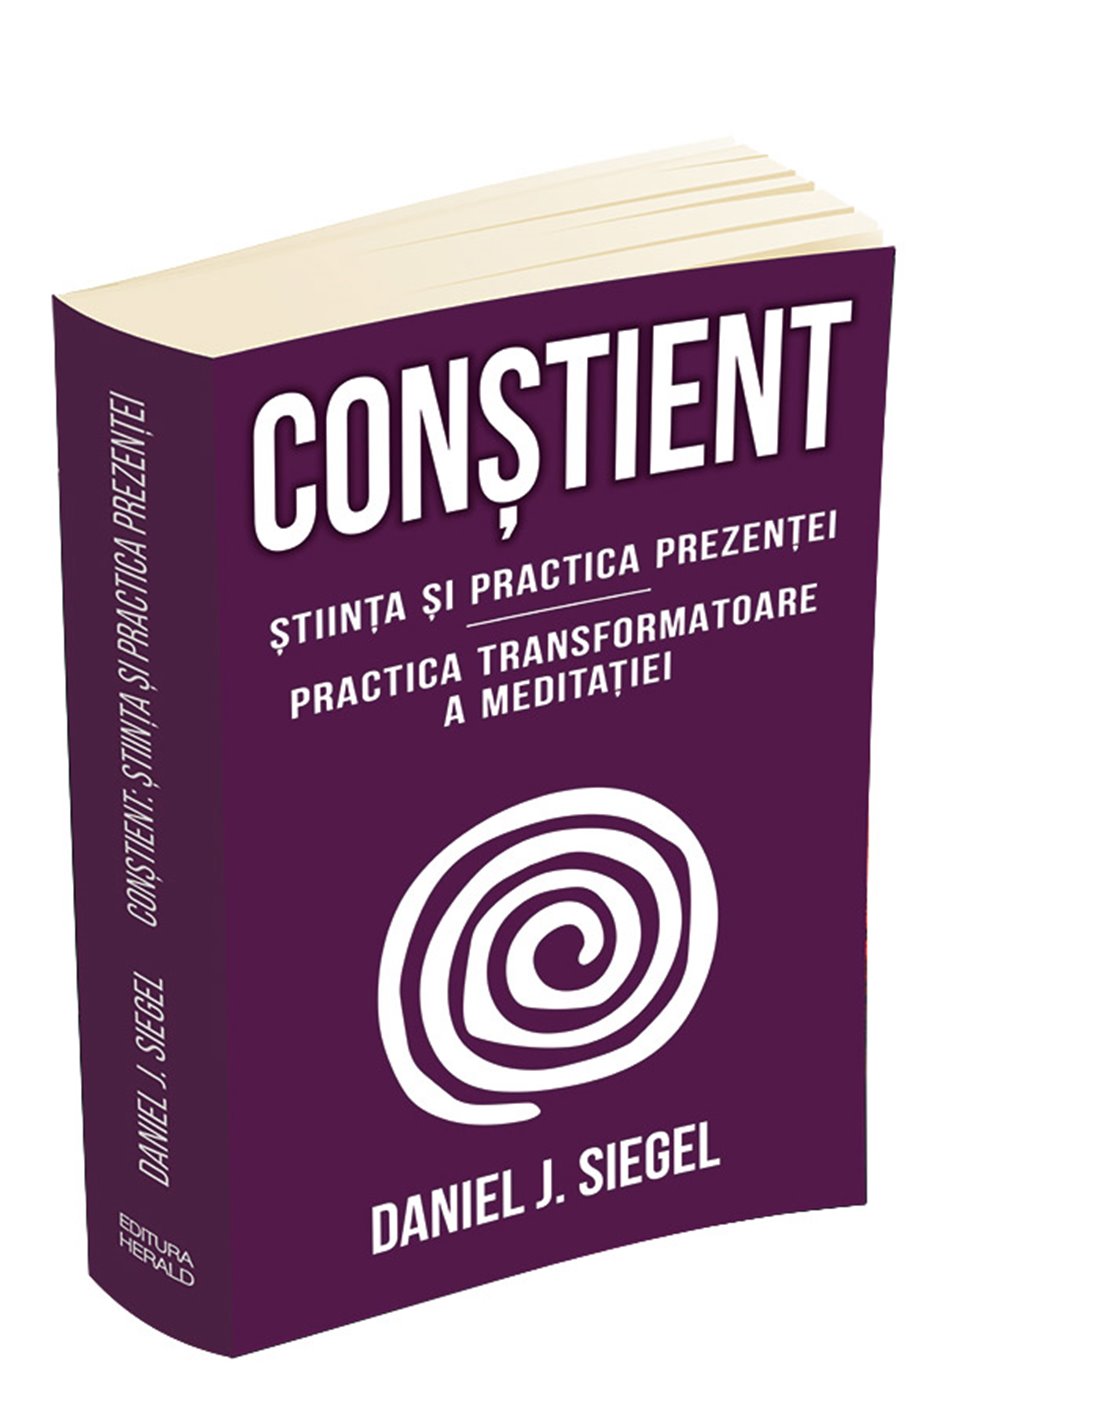 Constient - Stiinta si practica prezentei - Daniel J. Siegel | Editura Herald